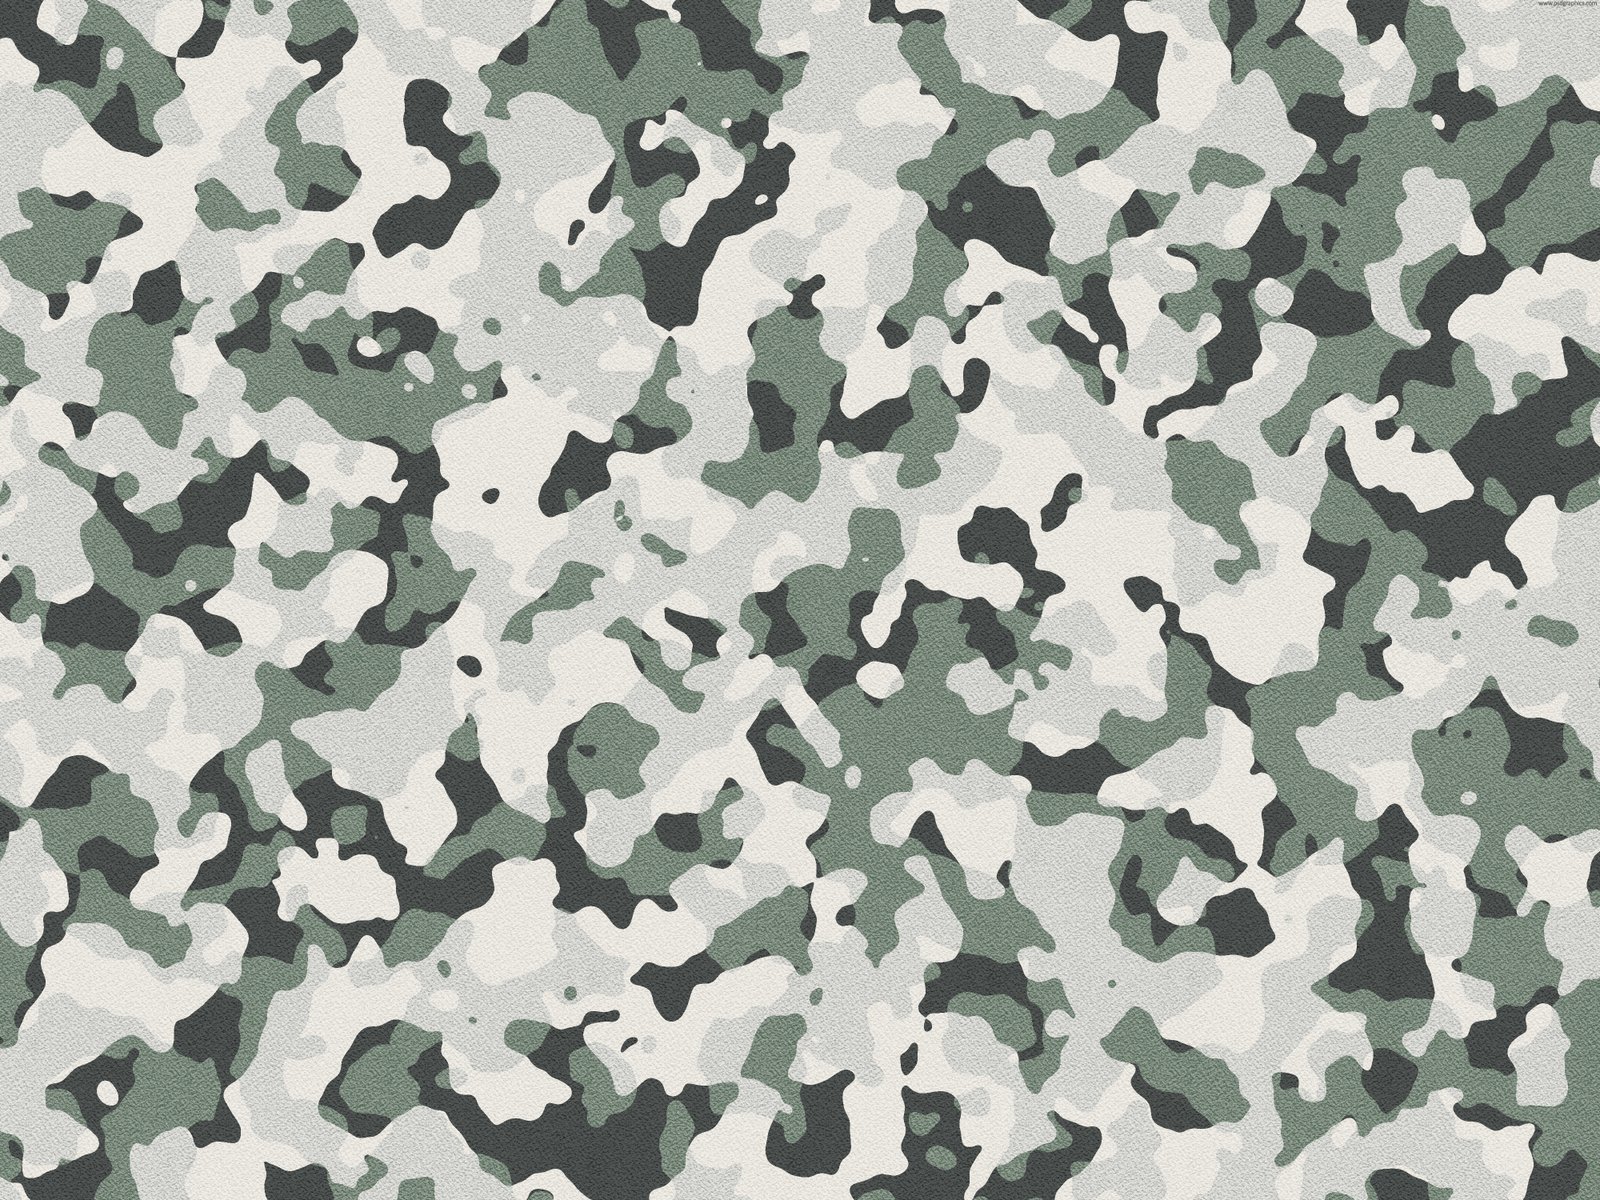 Types of camouflage patterns - lopicomputing